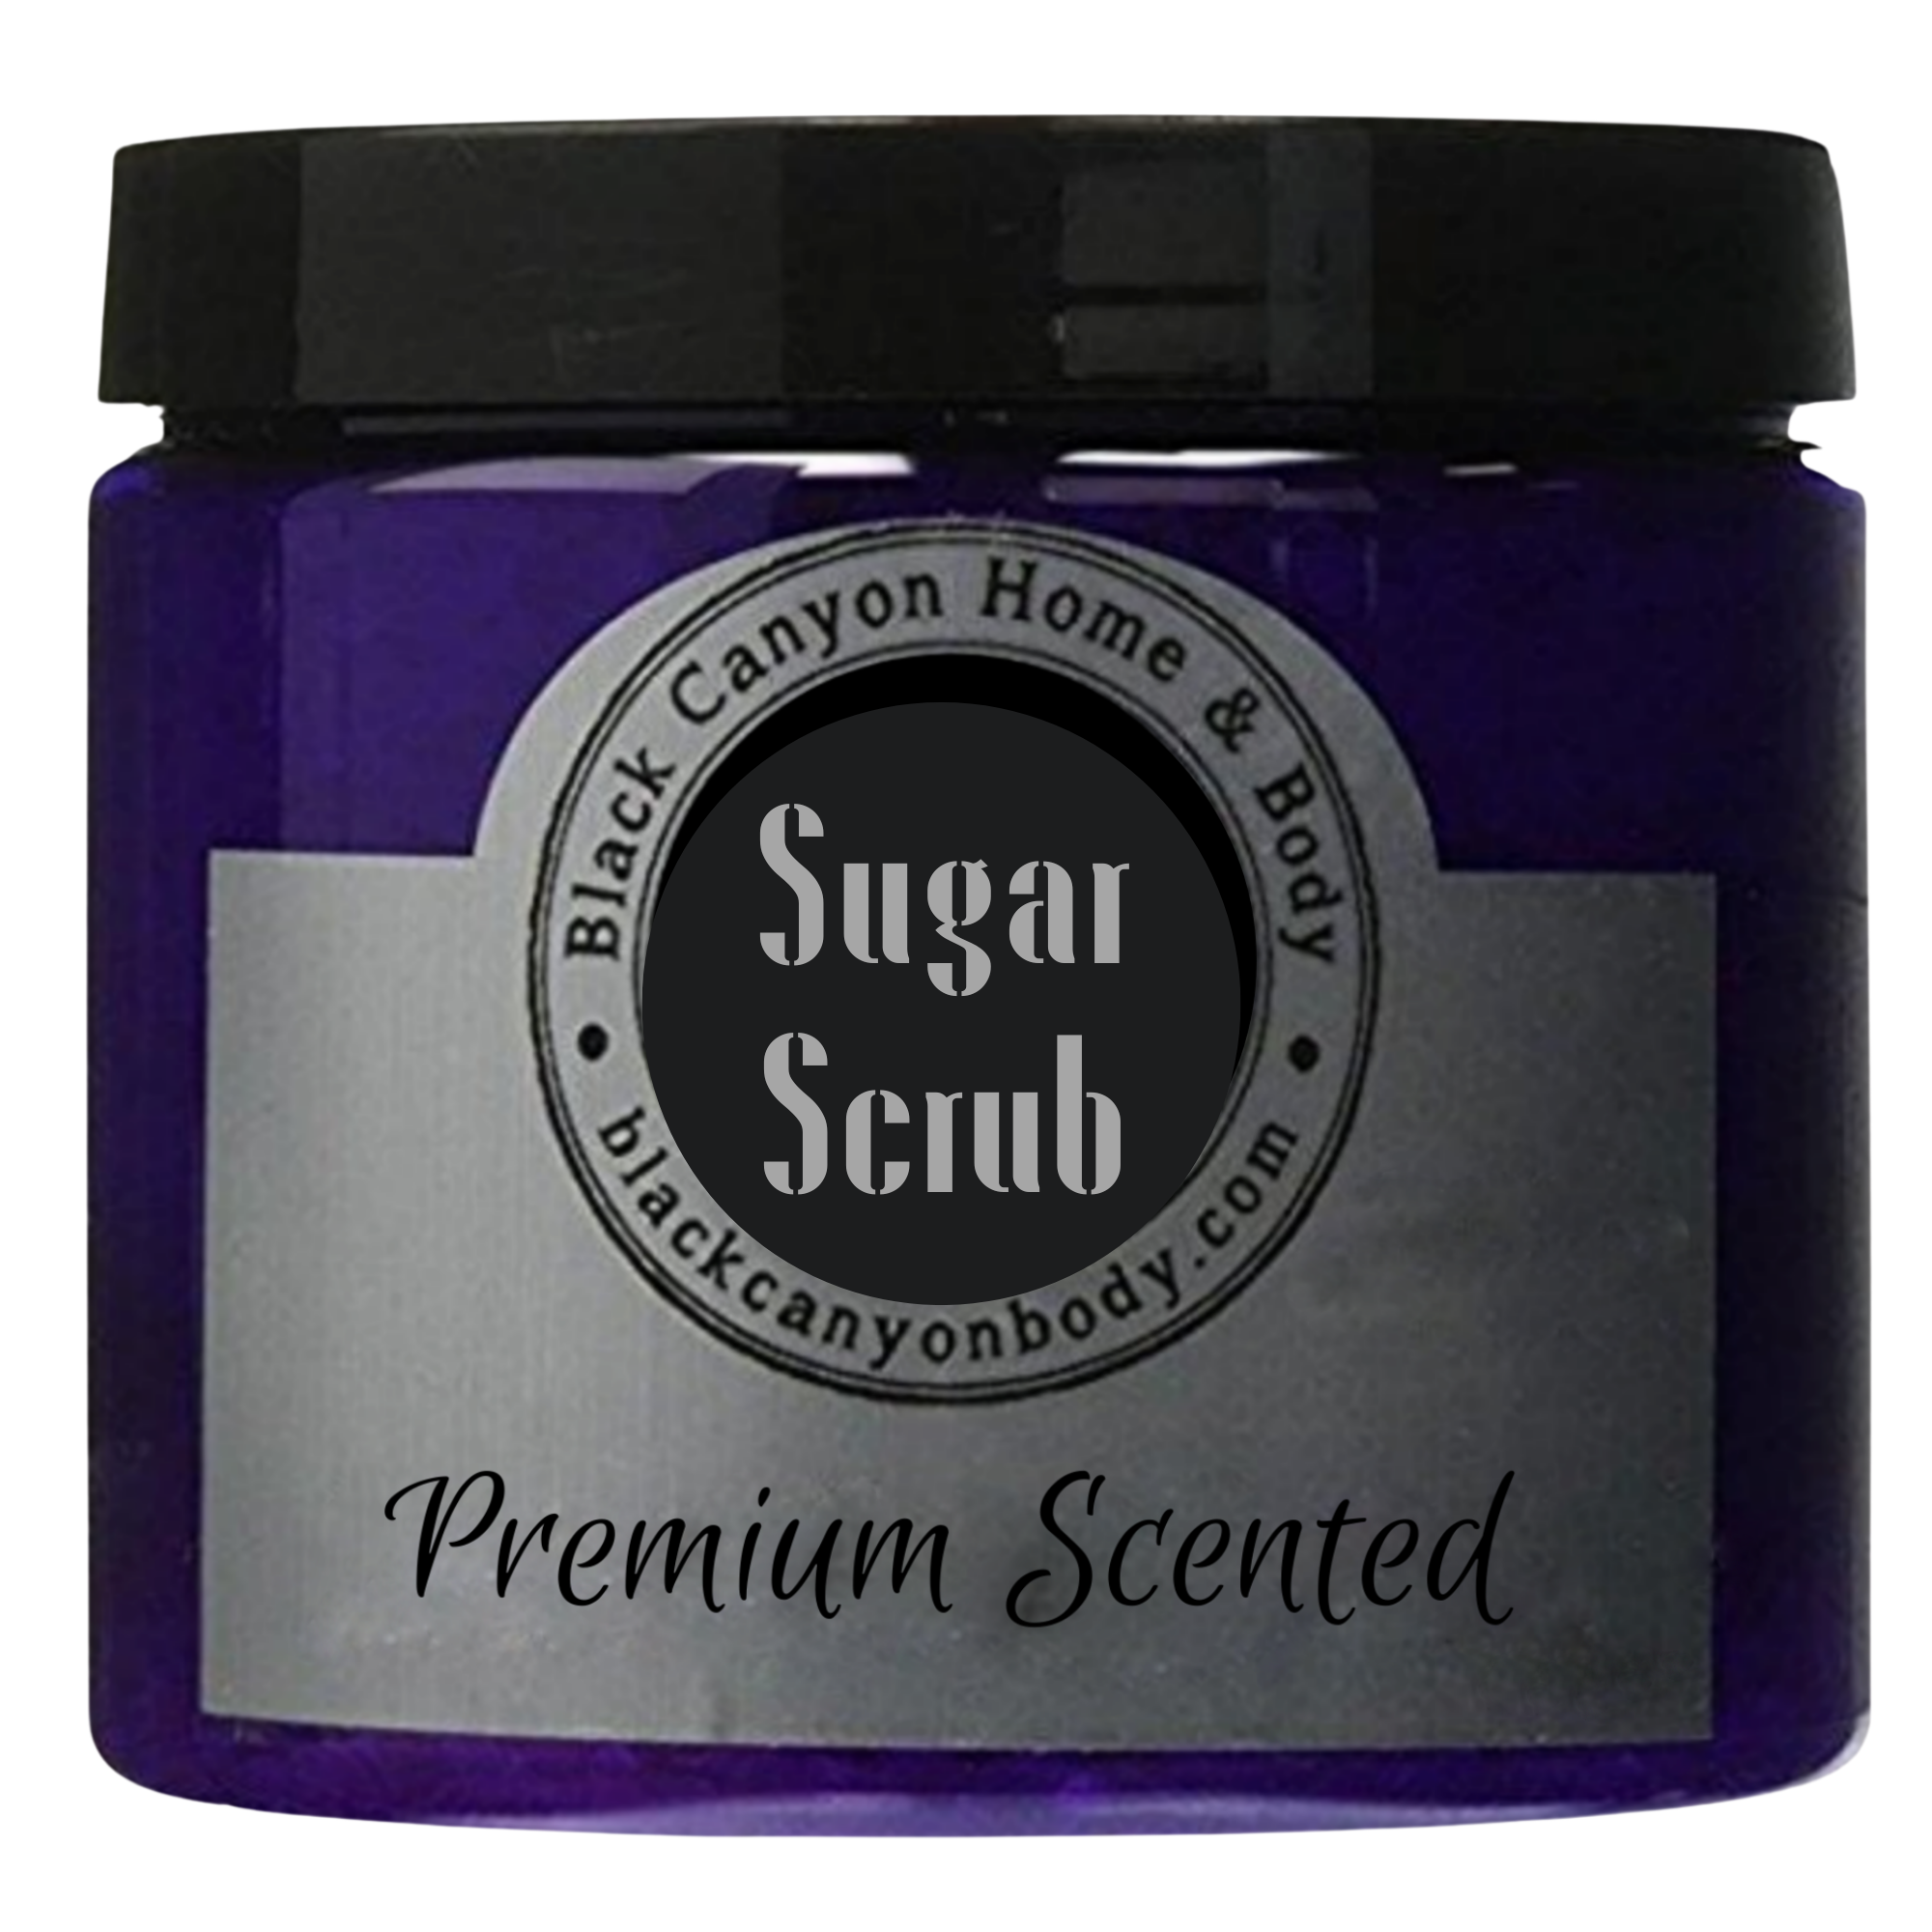 Black Canyon Myrrh & Patchouli Scented Sugar Scrub